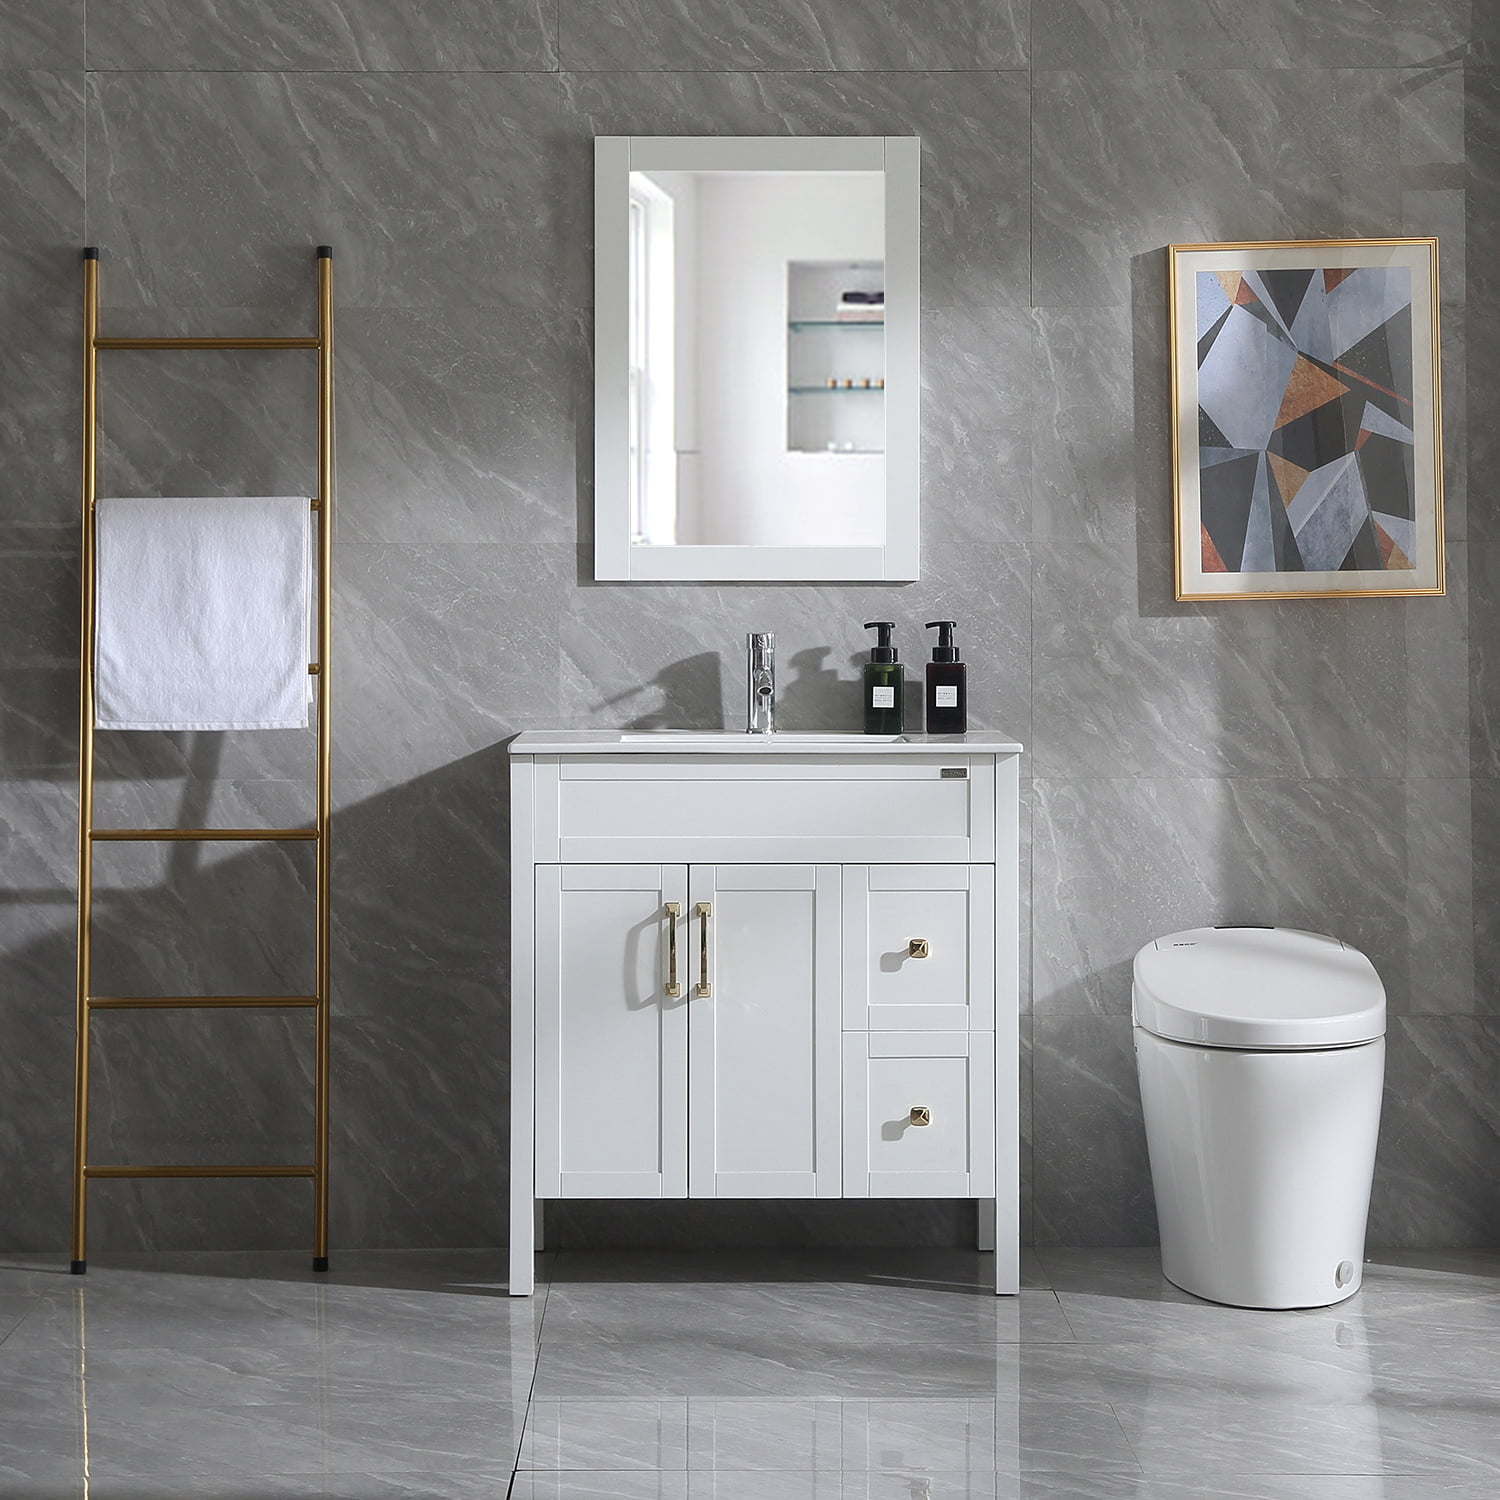 W 32 Inches Bathroom Vanity Combo, Bathroom Vanity Freestanding Sink